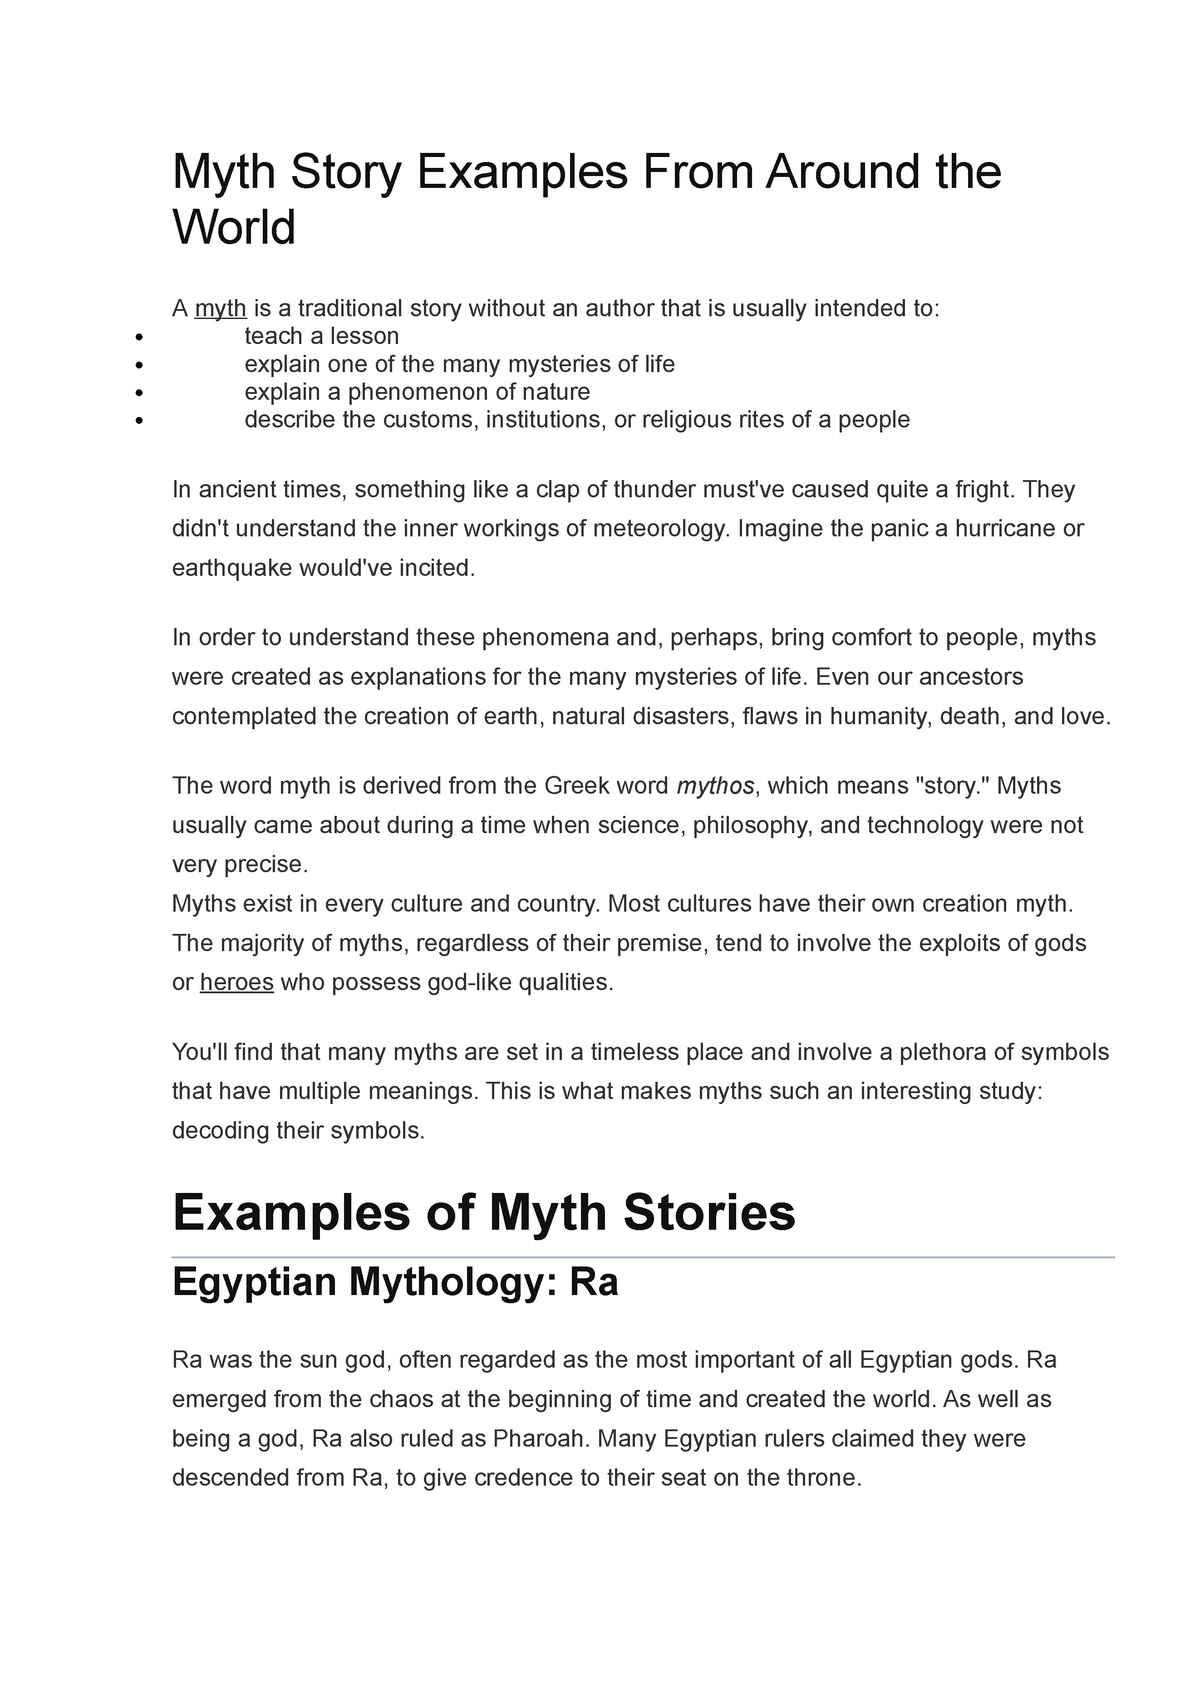 essay about a myth